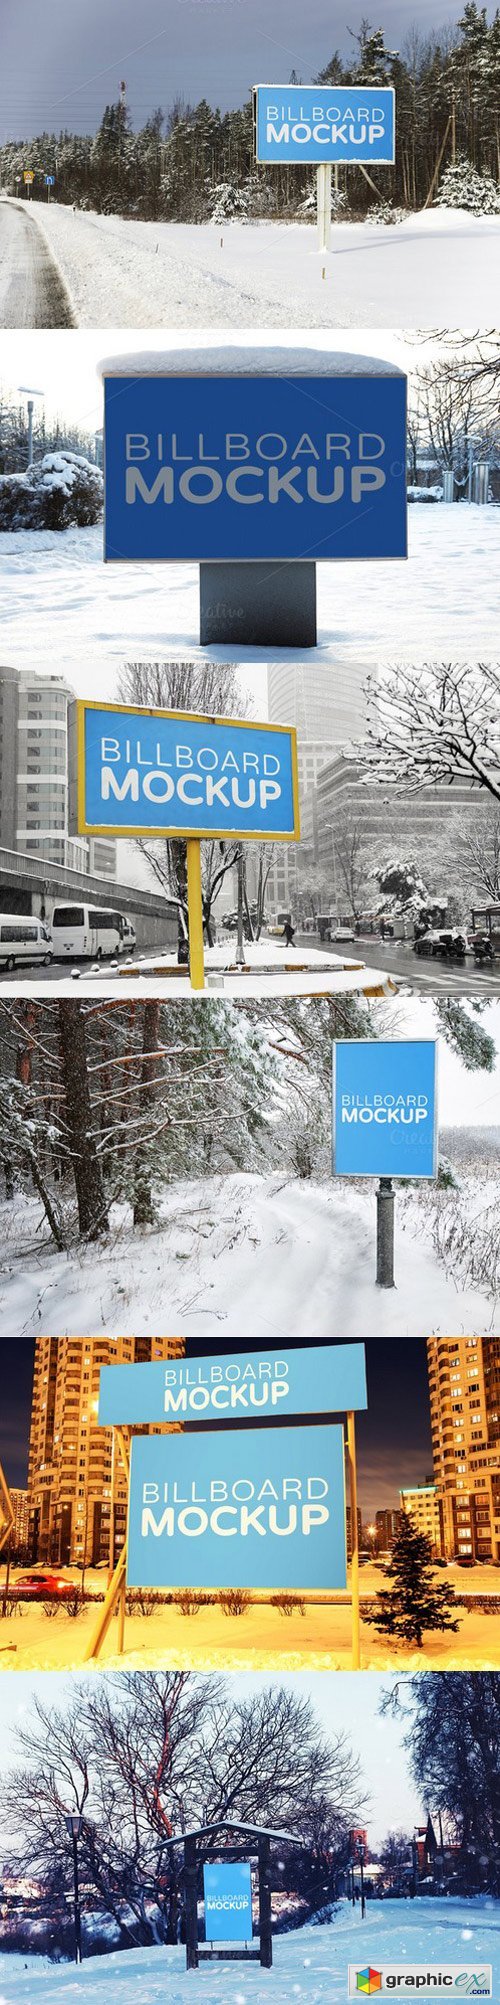 Billboards Mockups in Winter